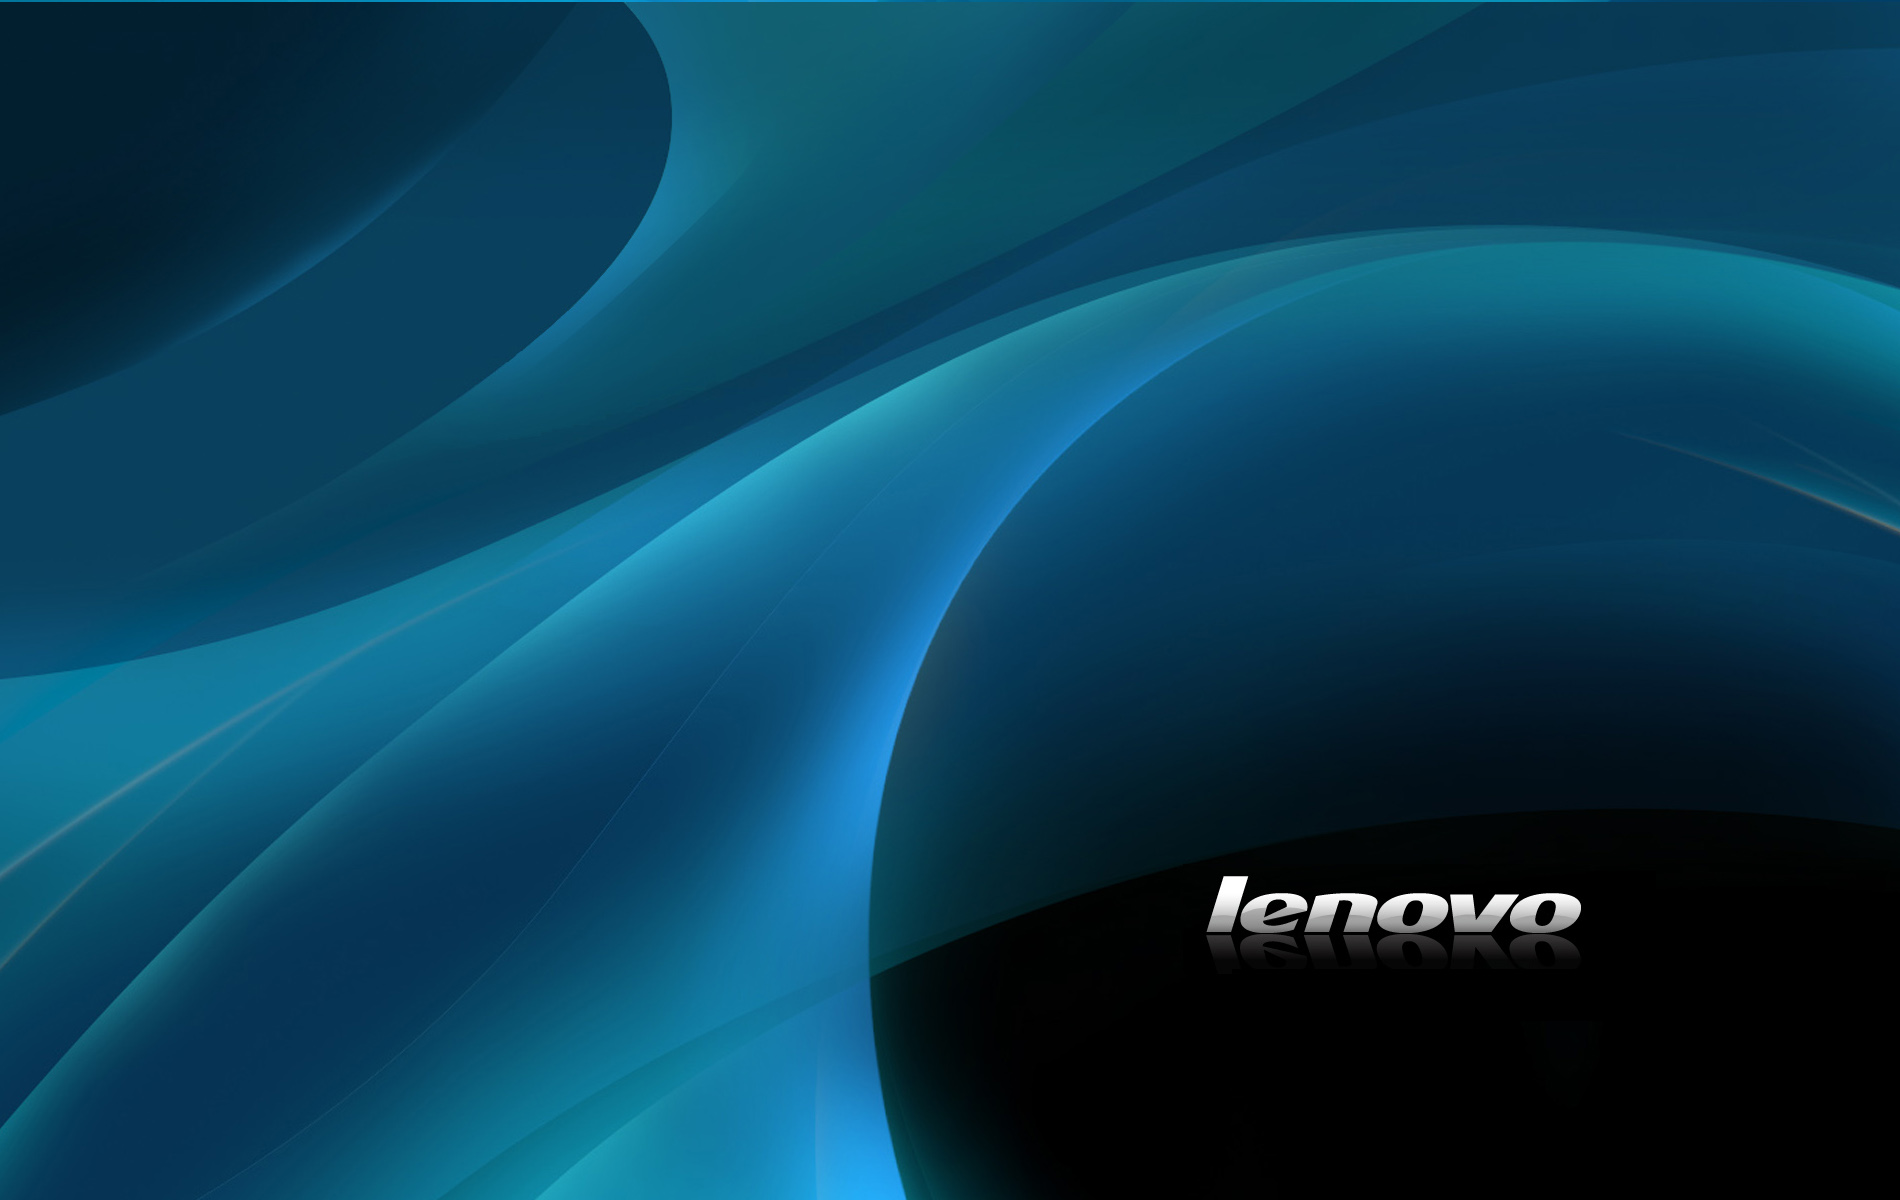 [46+] Lenovo Desktop Wallpaper on WallpaperSafari Full Hd Wallpapers For Windows 8 1920x1080